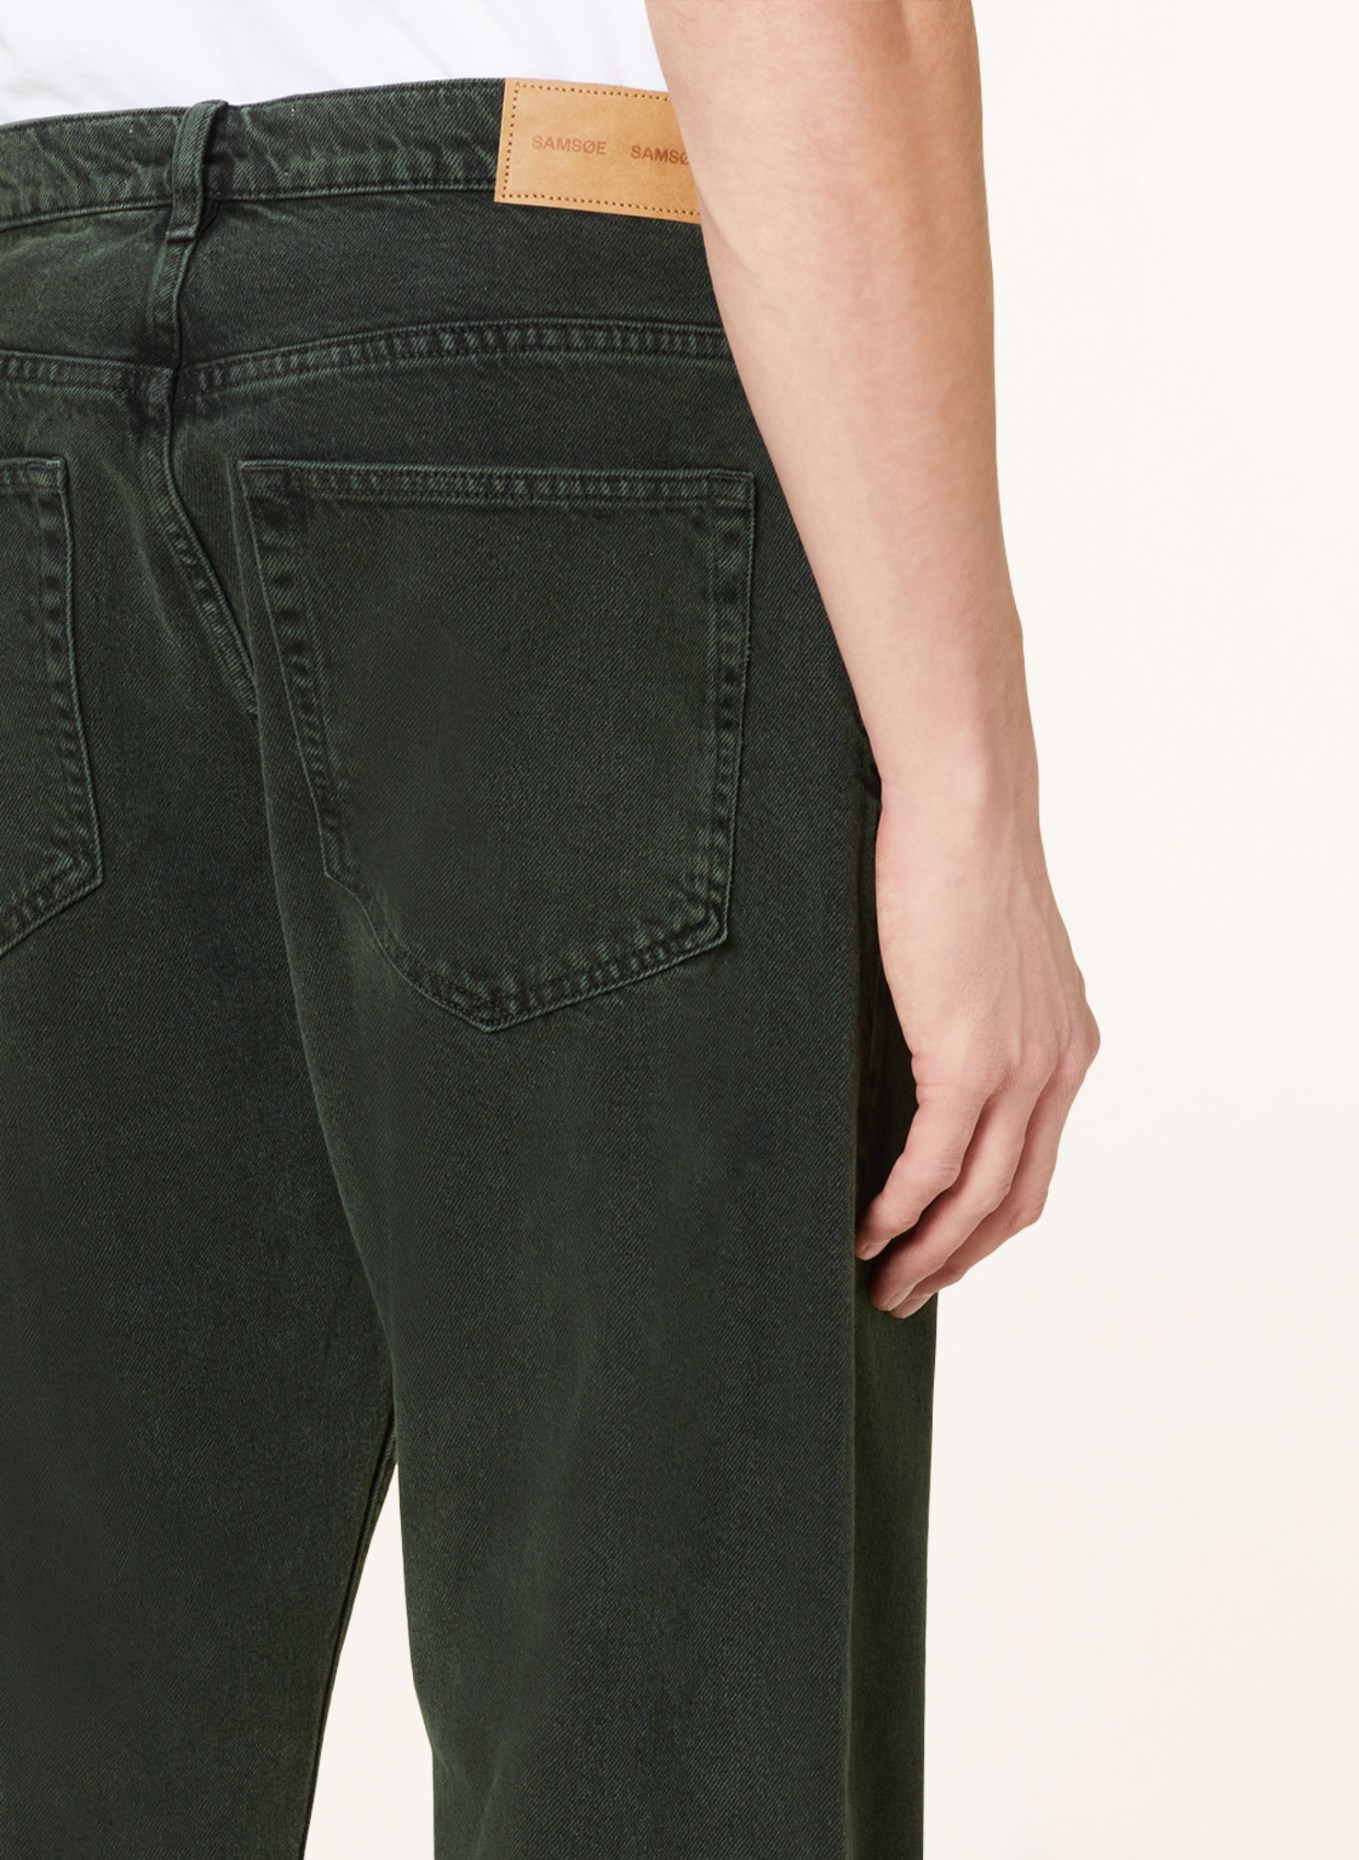 SAMSØE  SAMSØE Jeans EDDIE Loose Fit, Farbe: CLR001082 Green marble (Bild 6)